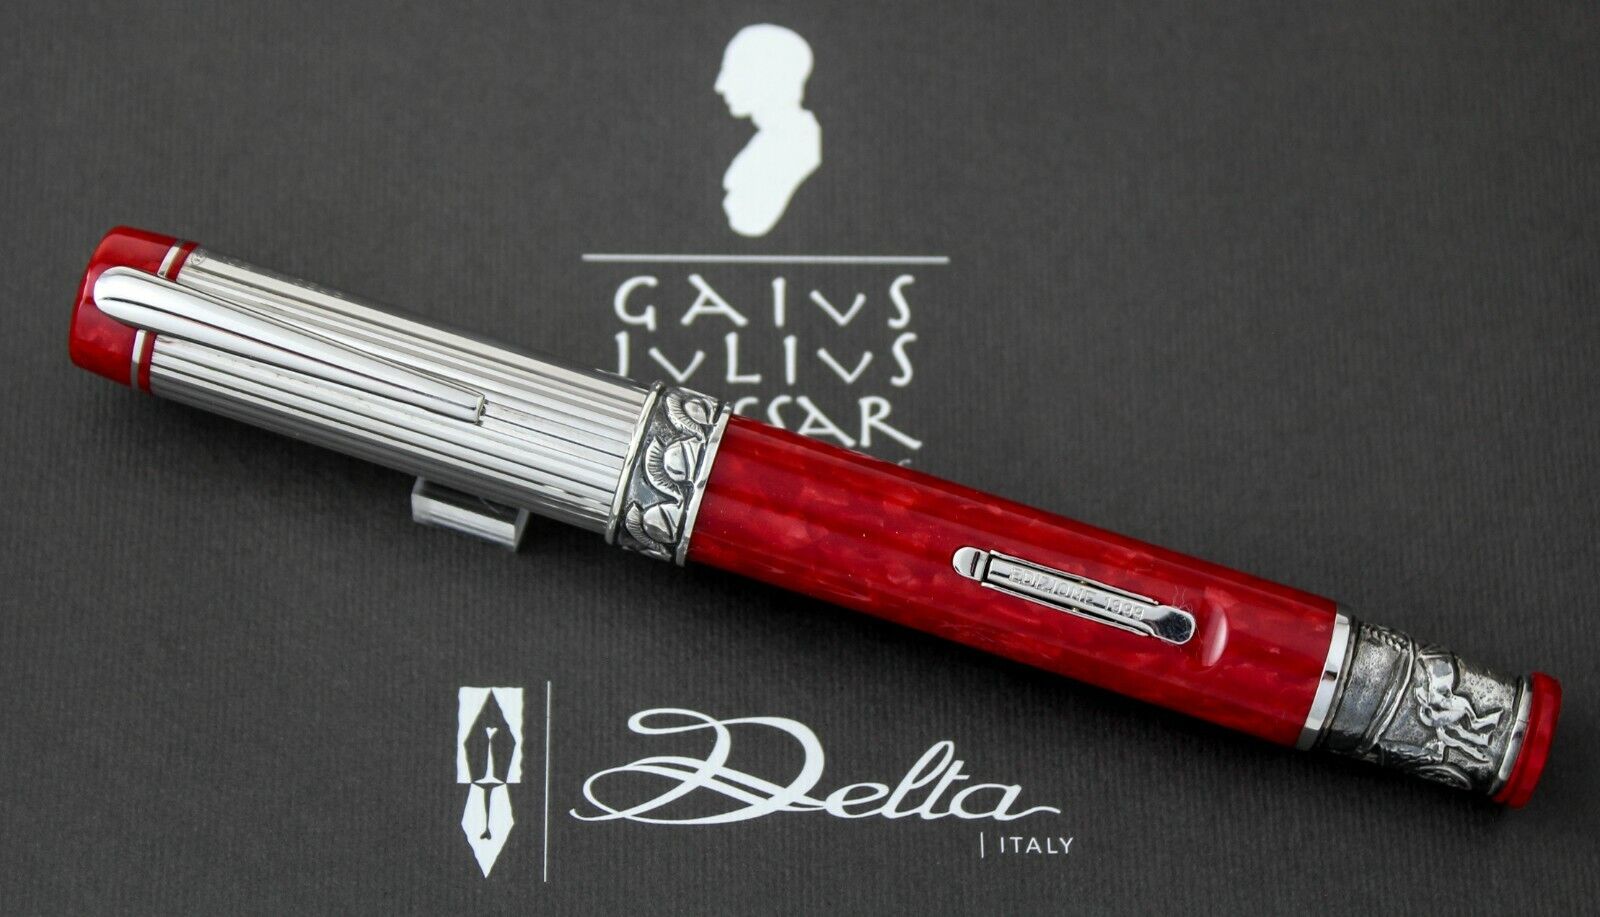 Delta Gaius Julius Caesar Special Limited Edition Red & Silver Fountain Pen